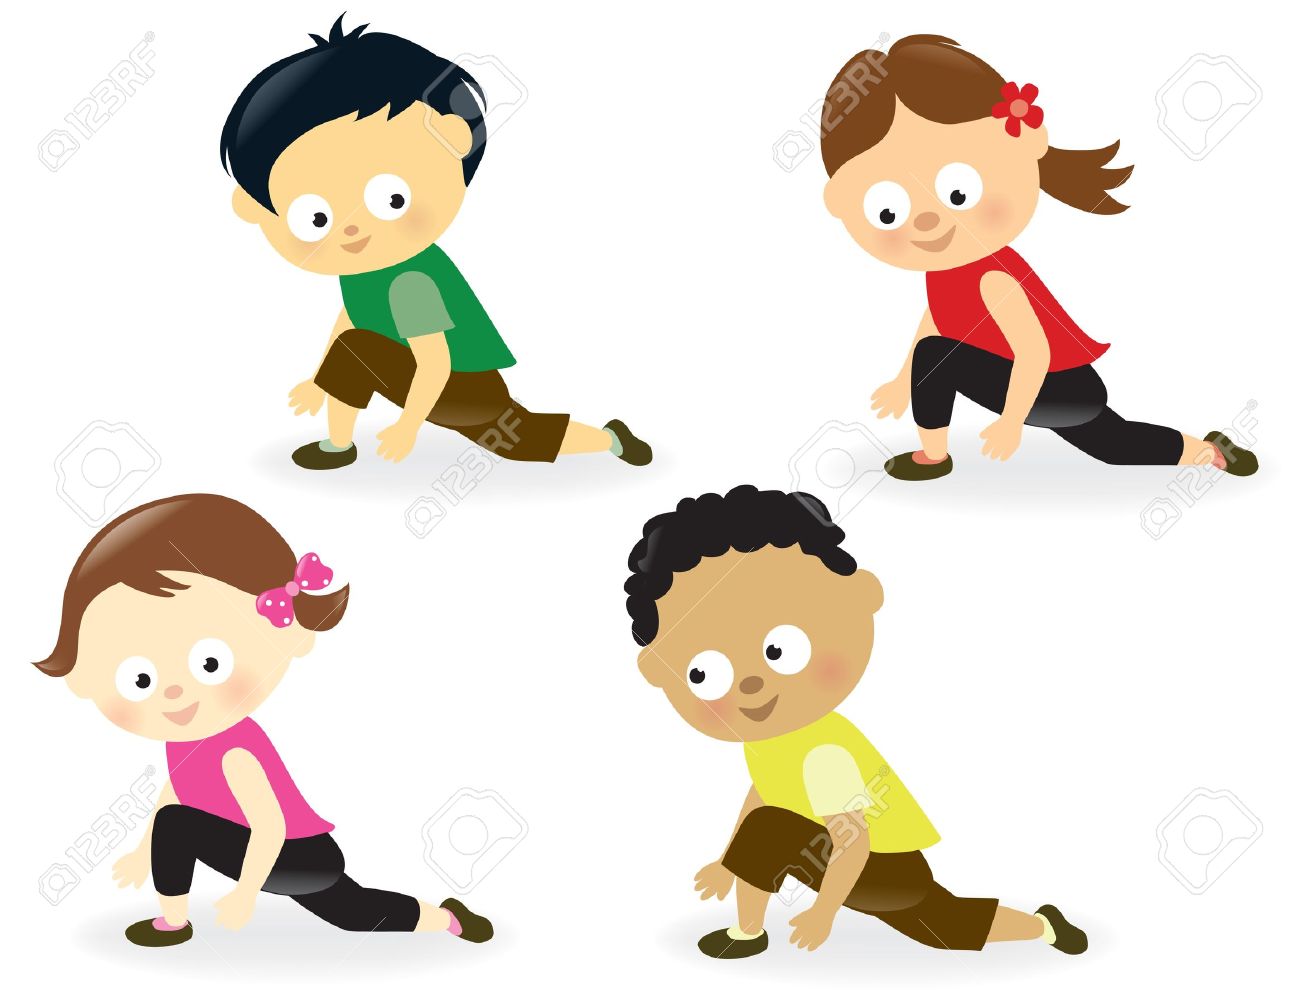 Exercise clipart preschool. Kids free download best